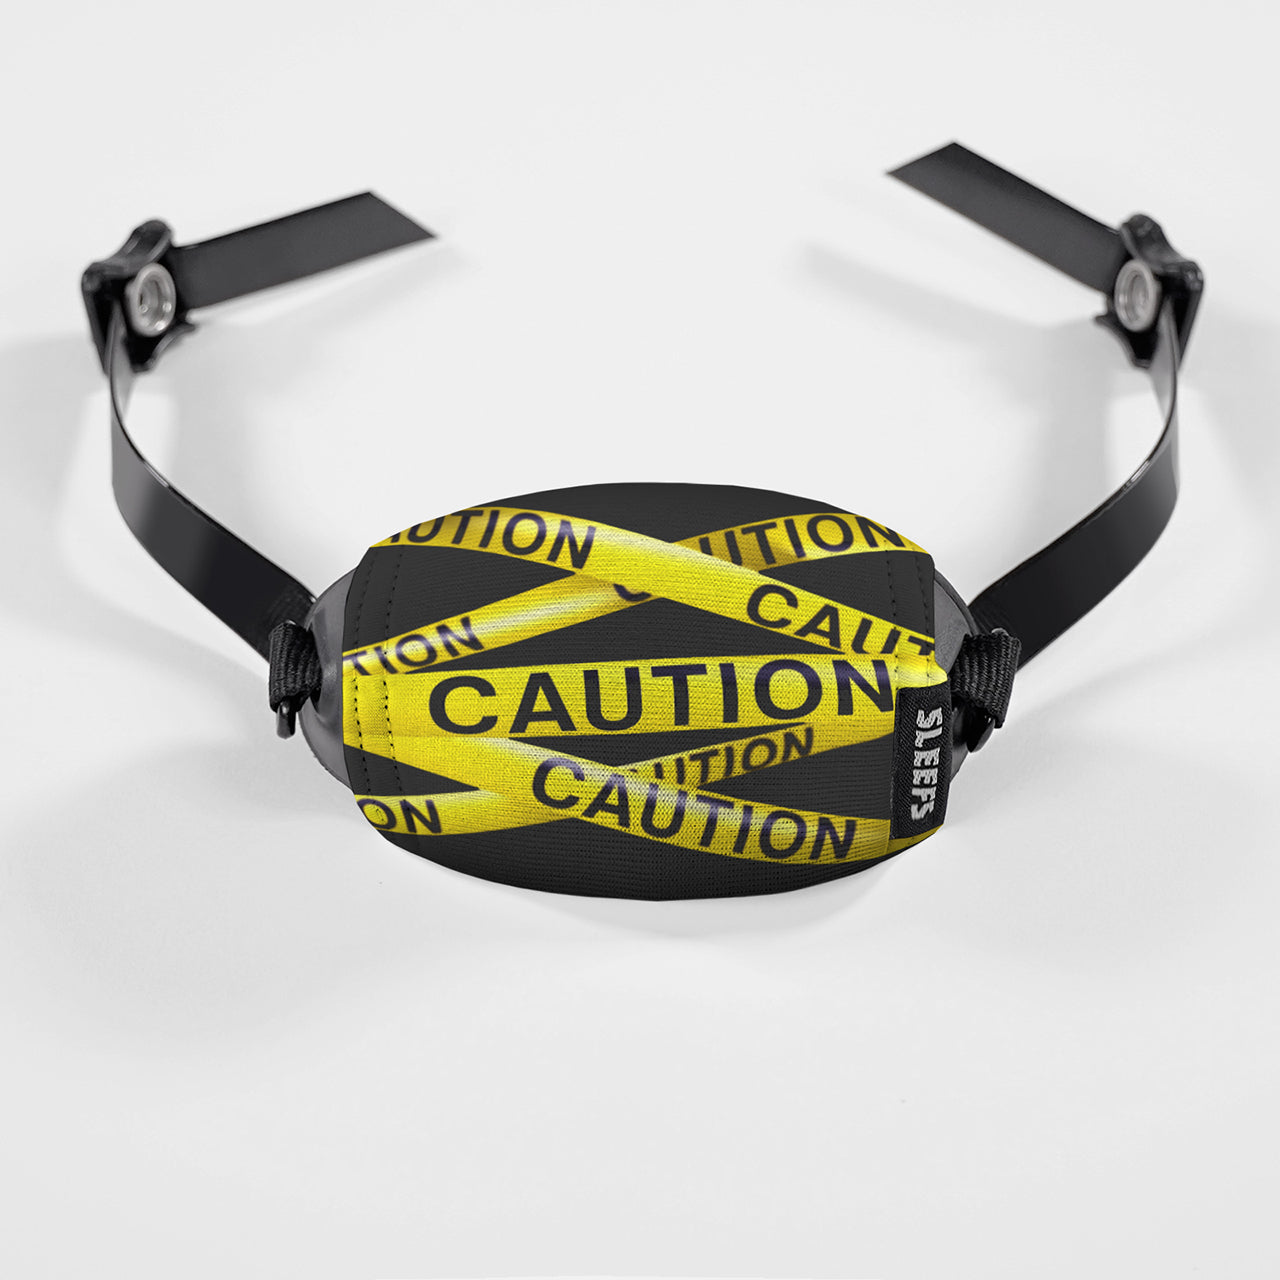 Caution Chin Strap Cover